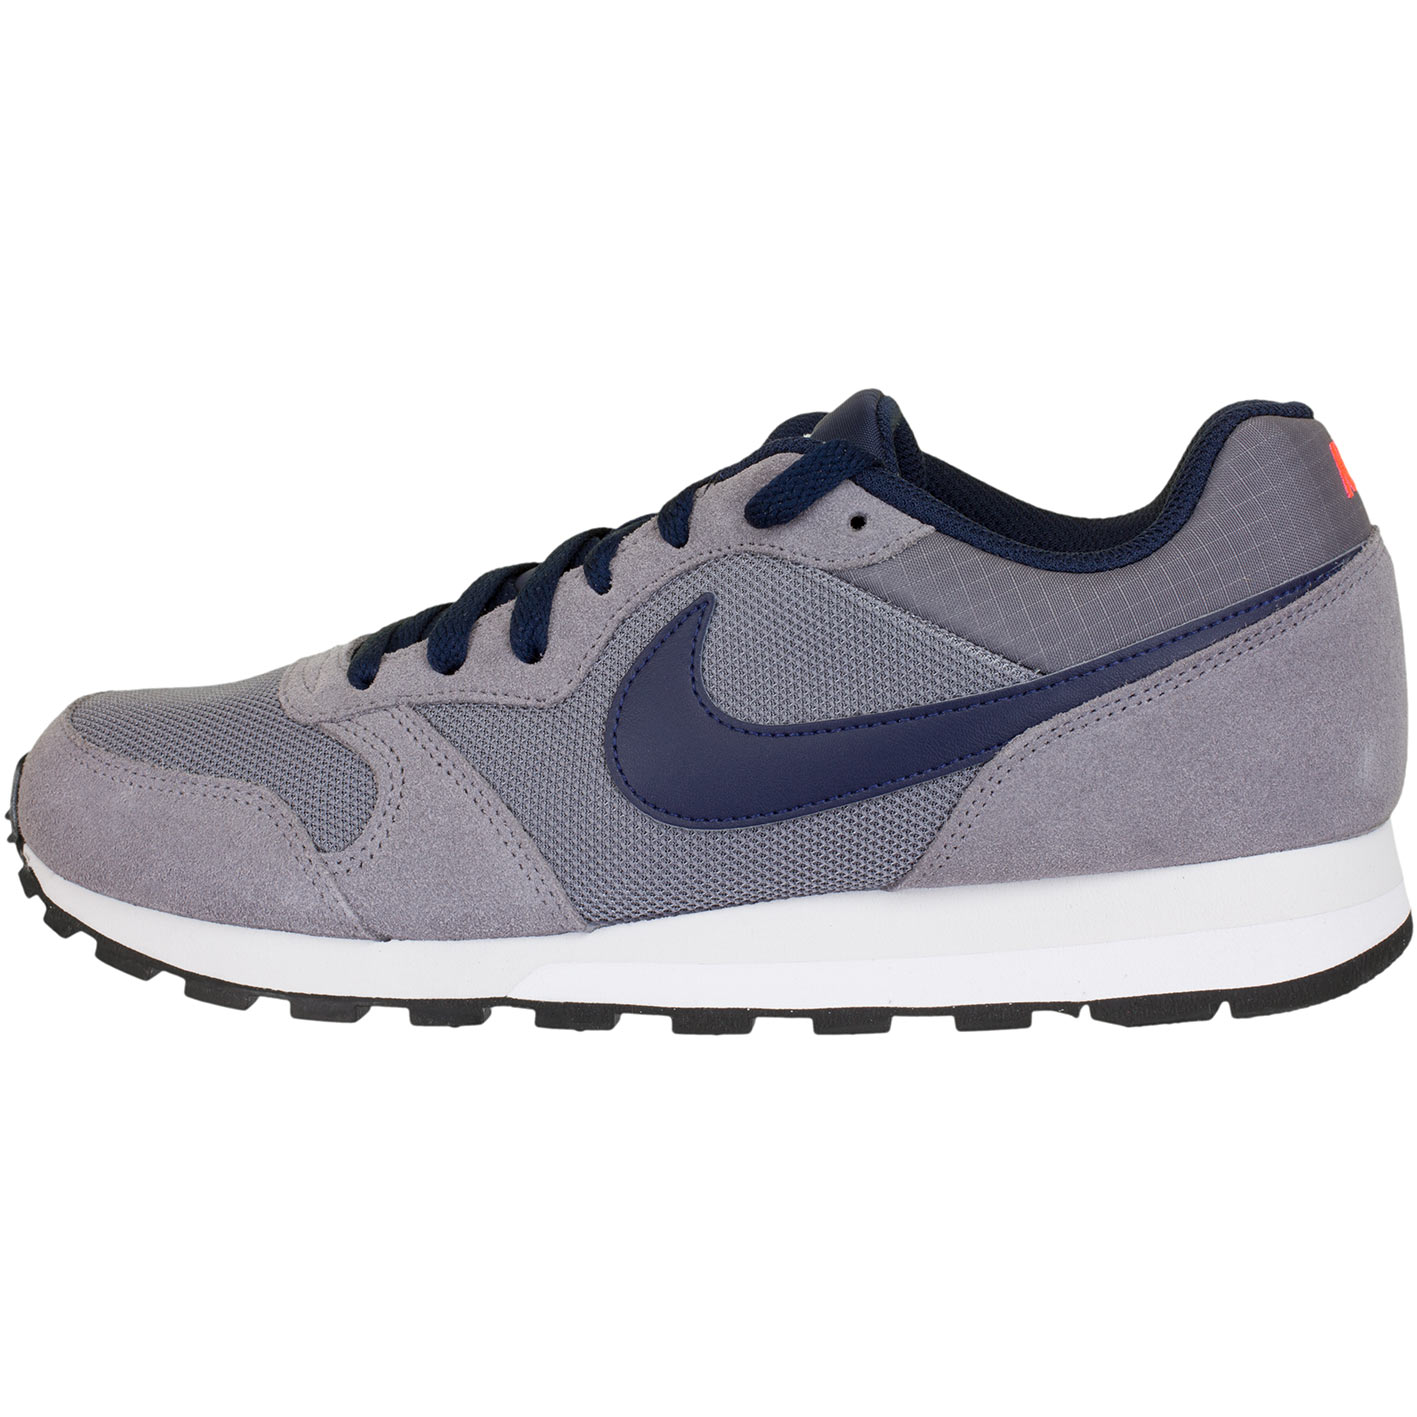 ☆ Nike Sneaker MD Runner 2 grau/dunkelblau - hier bestellen!